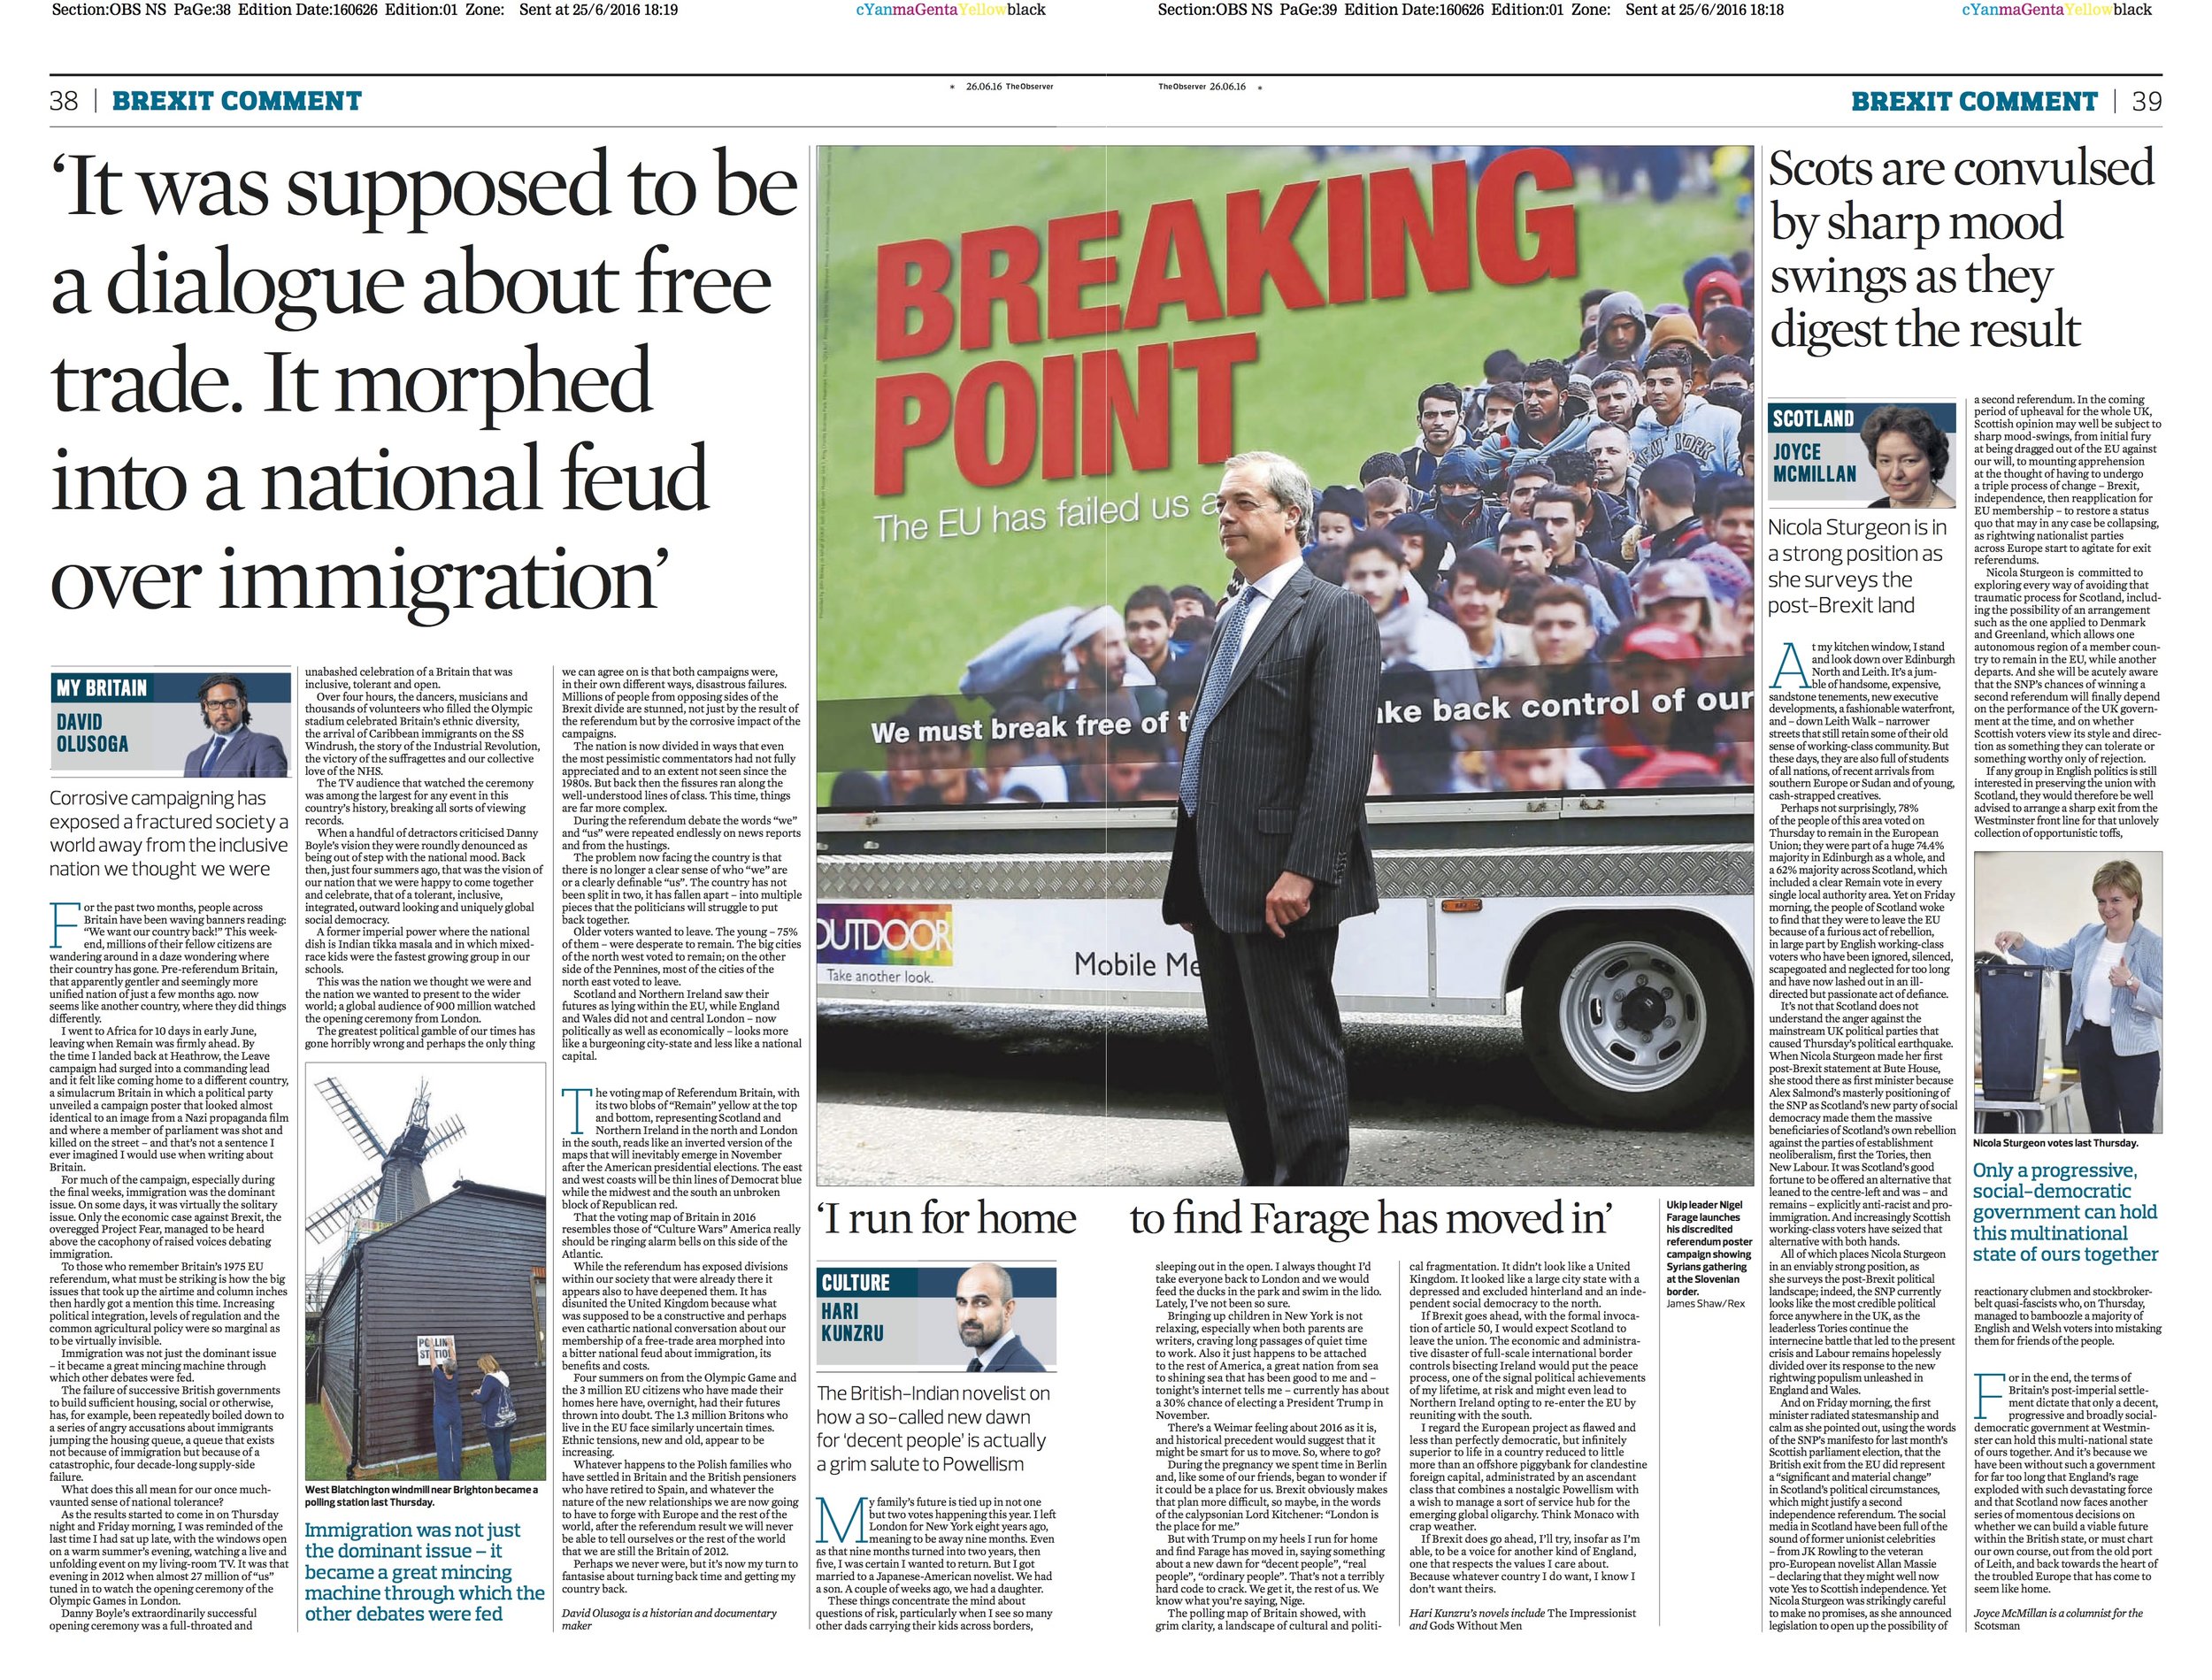 Nigel farage The Observer.jpg